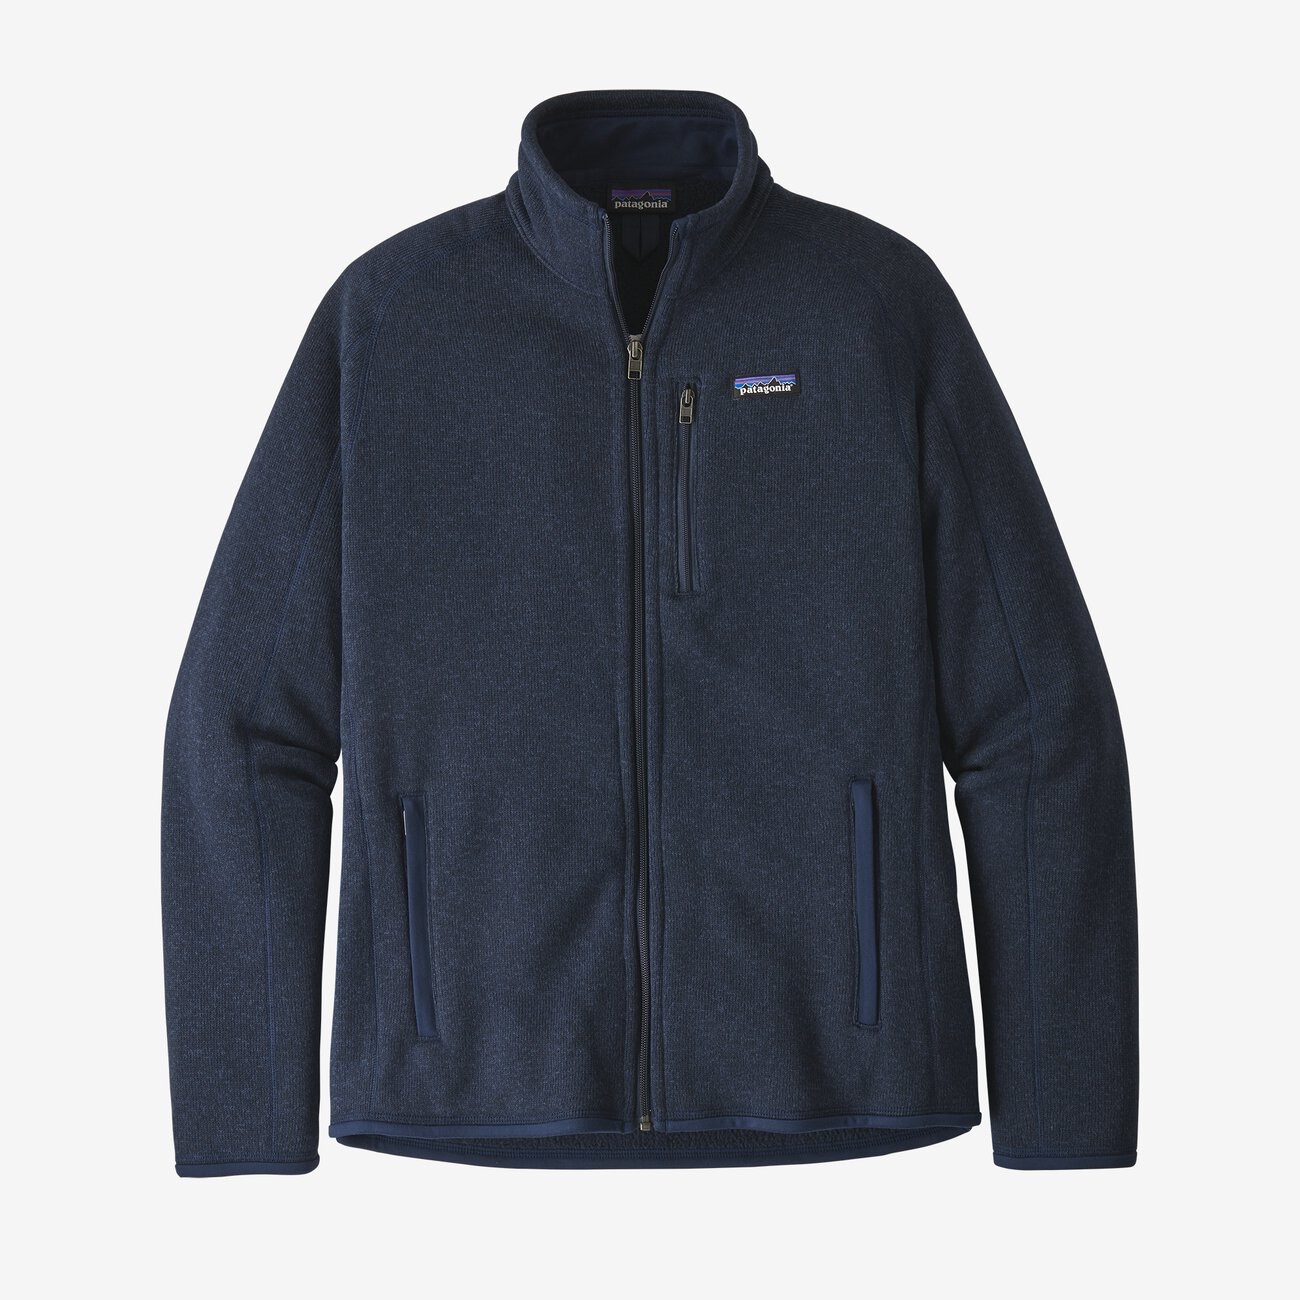 Patagonia M's Better Sweater Jacket - New Navy - Medium